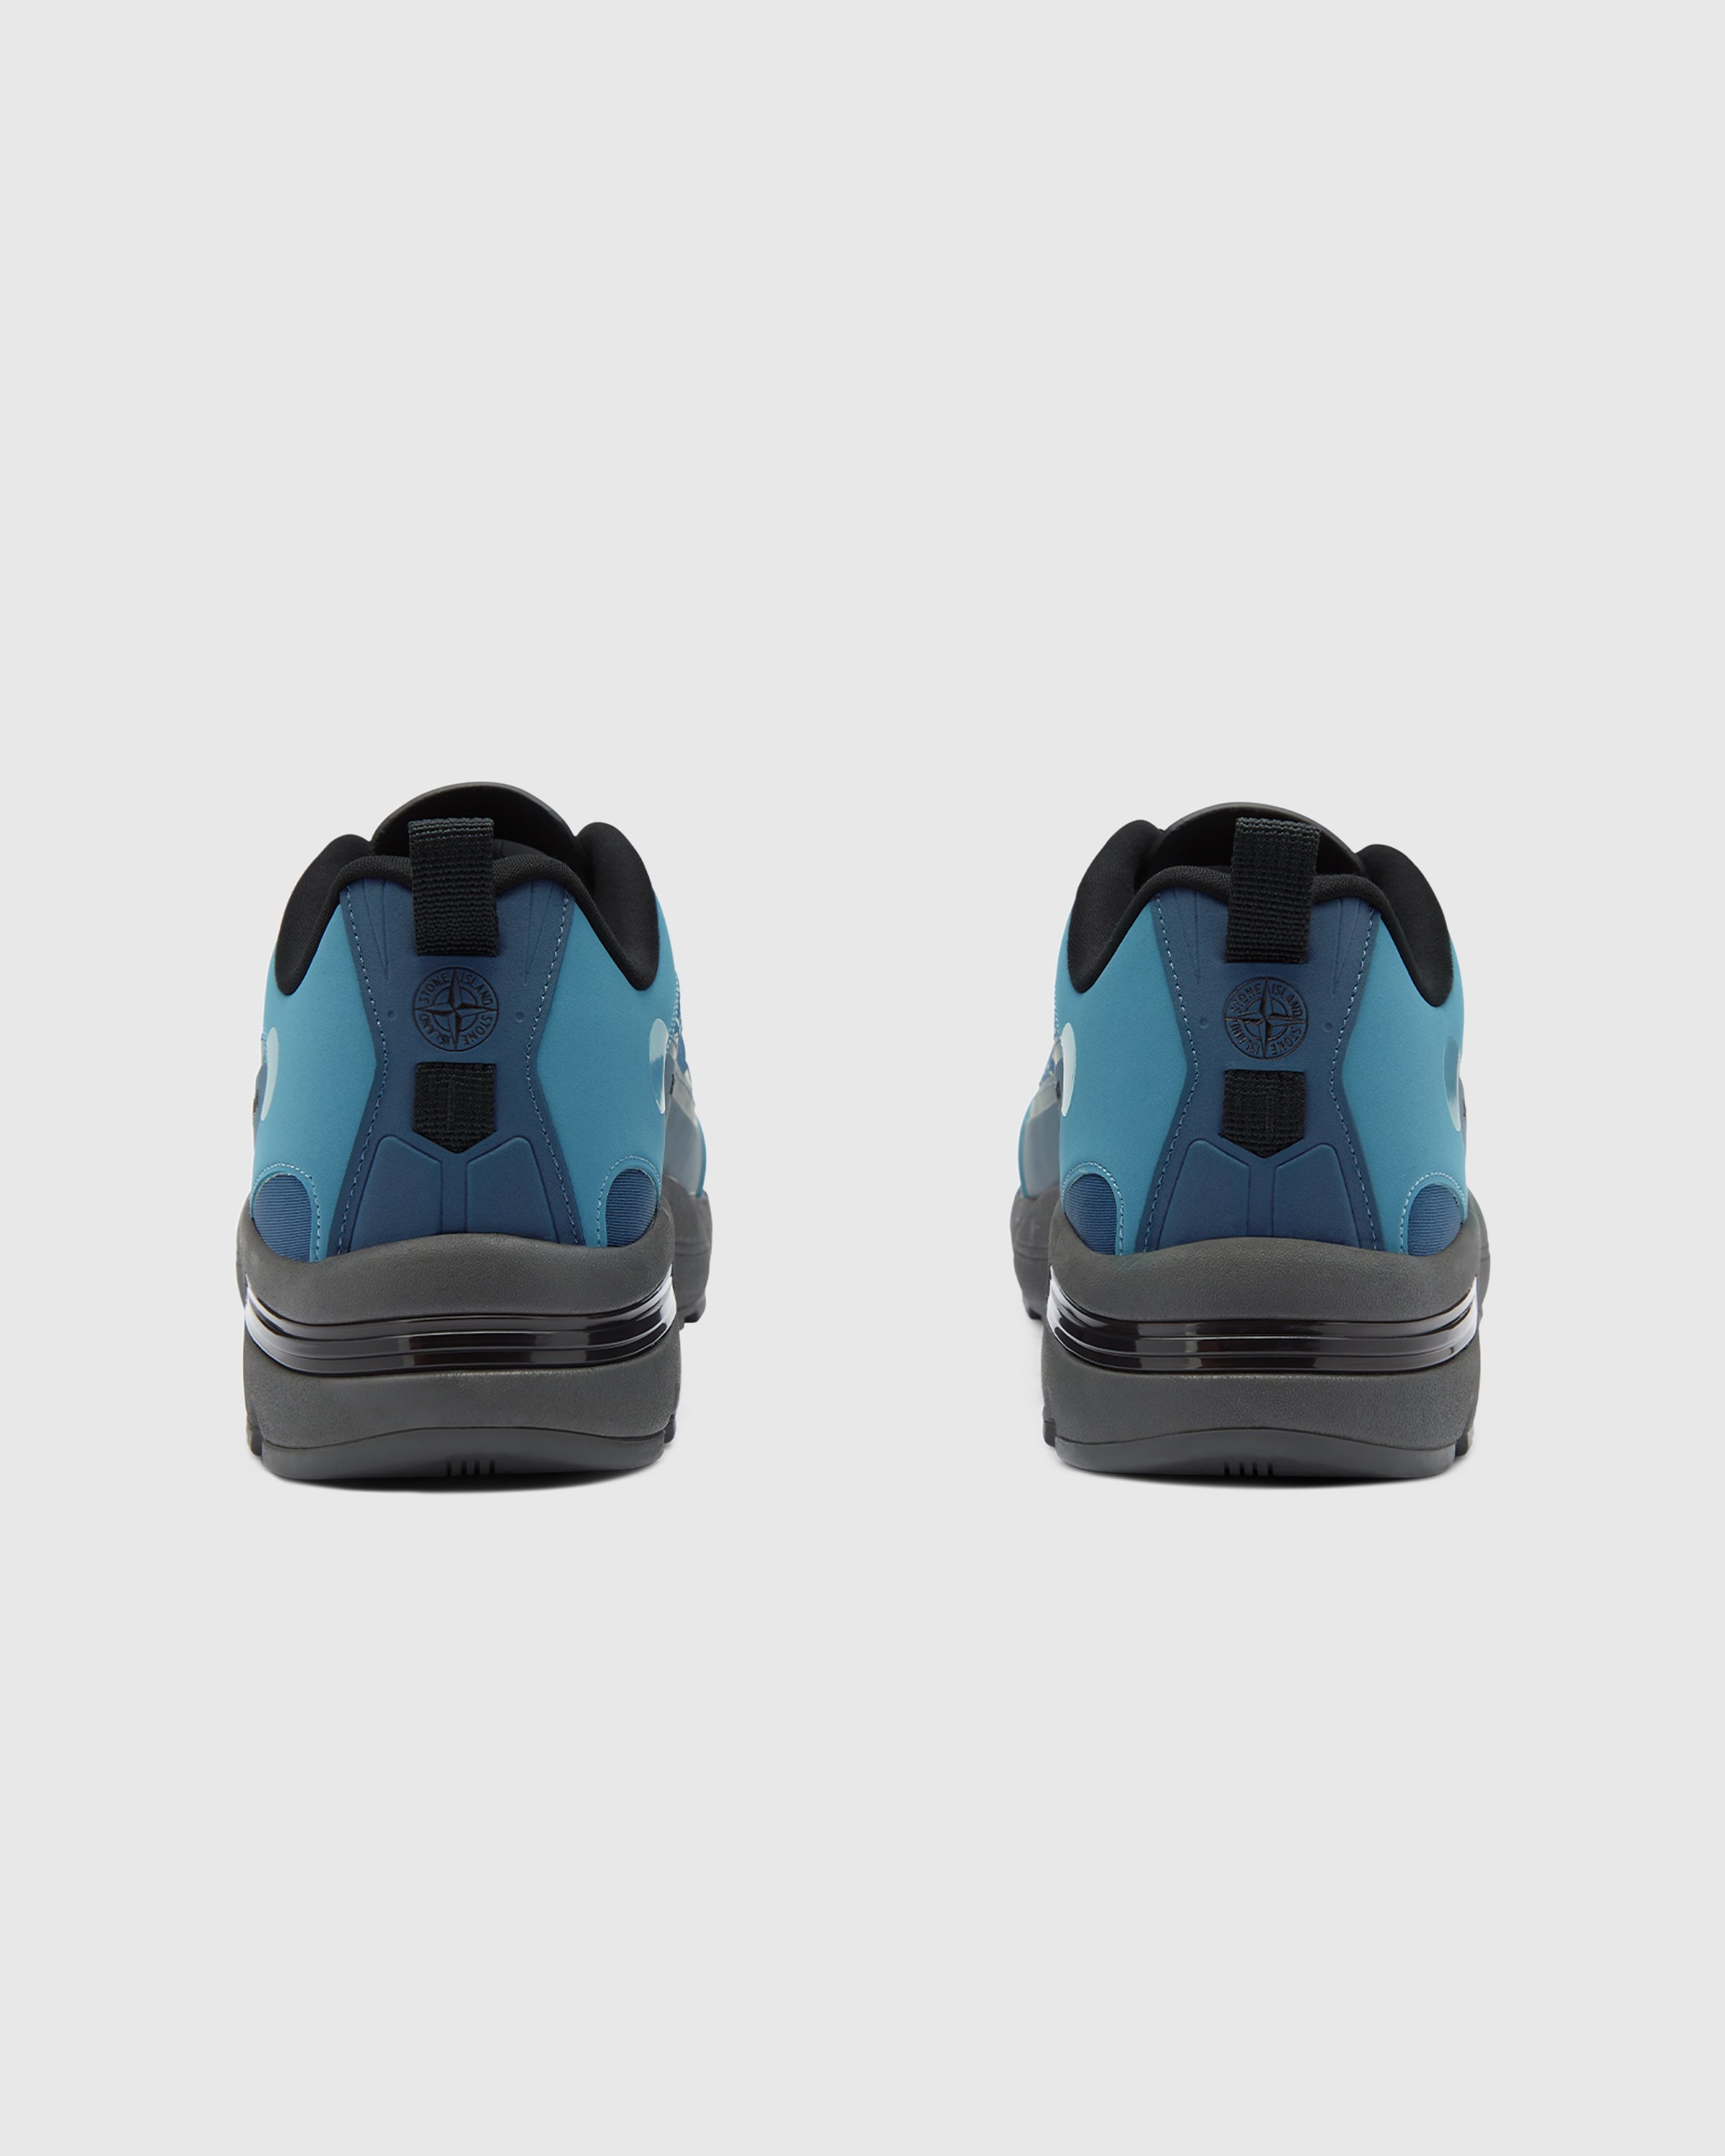 Stone Island - Grime Turquoise 78FWS033 - Footwear - Blue - Image 3